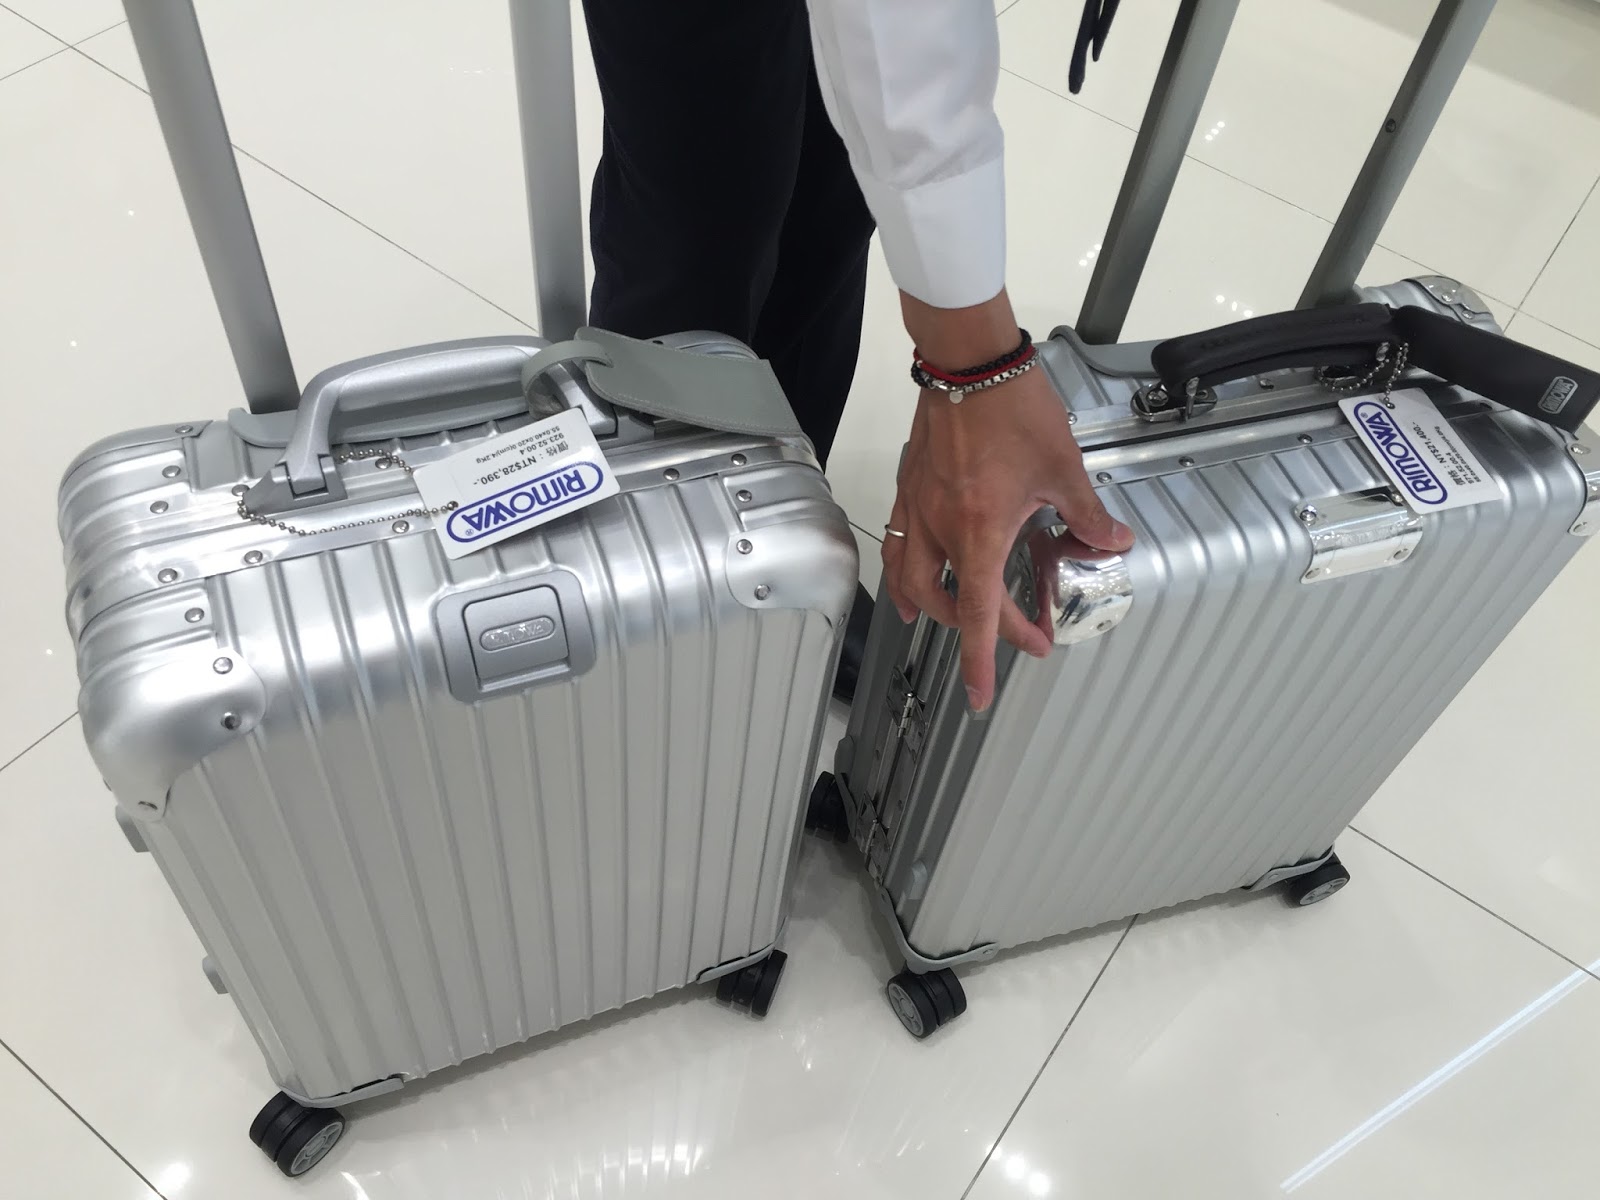 Bazk3t'z Blog: Rimowa, Expensive Suitcase, is it worth?